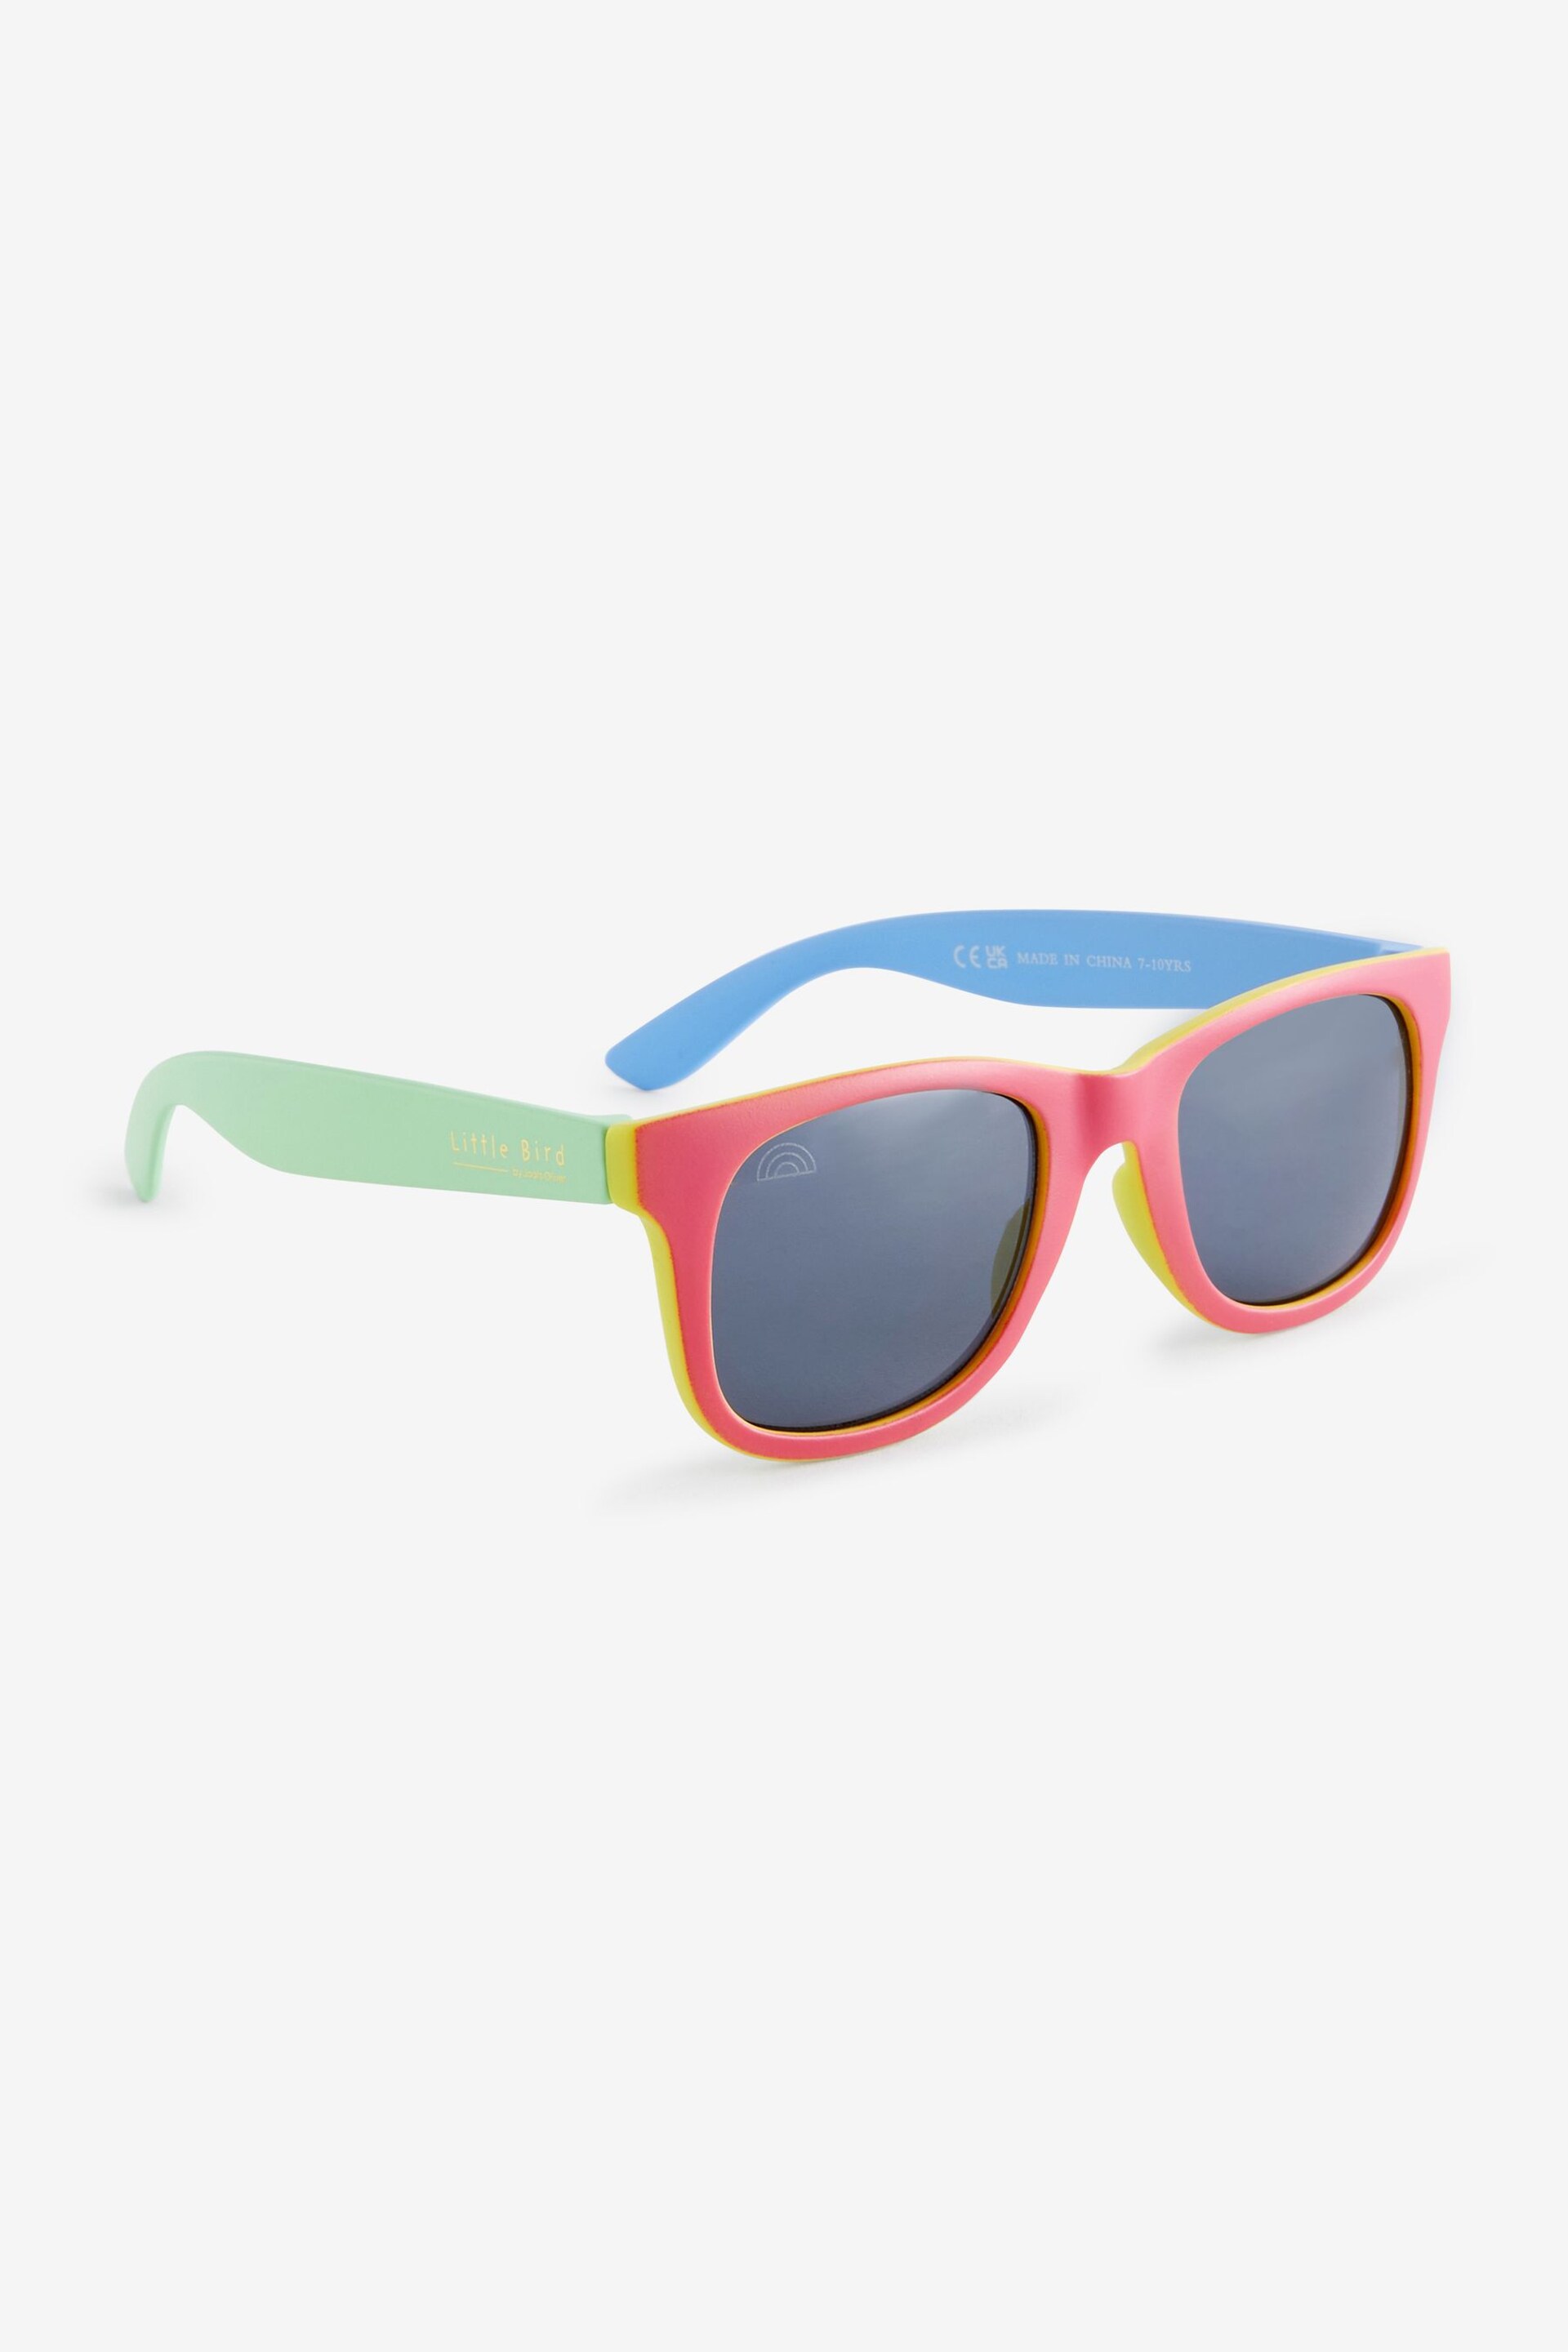 Little Bird by Jools Oliver Multi Pastel Rainbow Wayfarer Sunglasses - Image 6 of 7